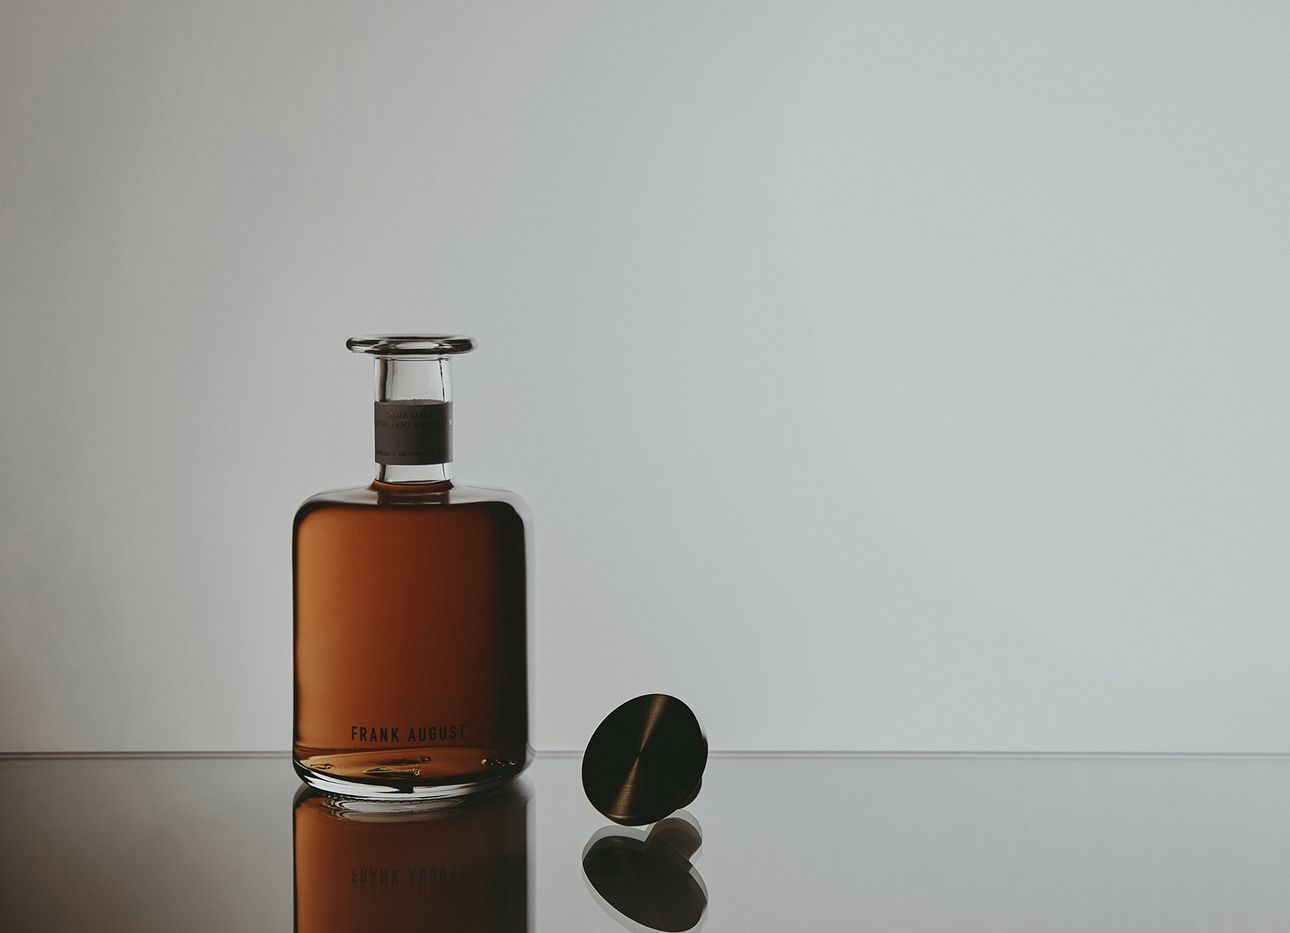 A bottle of Frank August bourbon